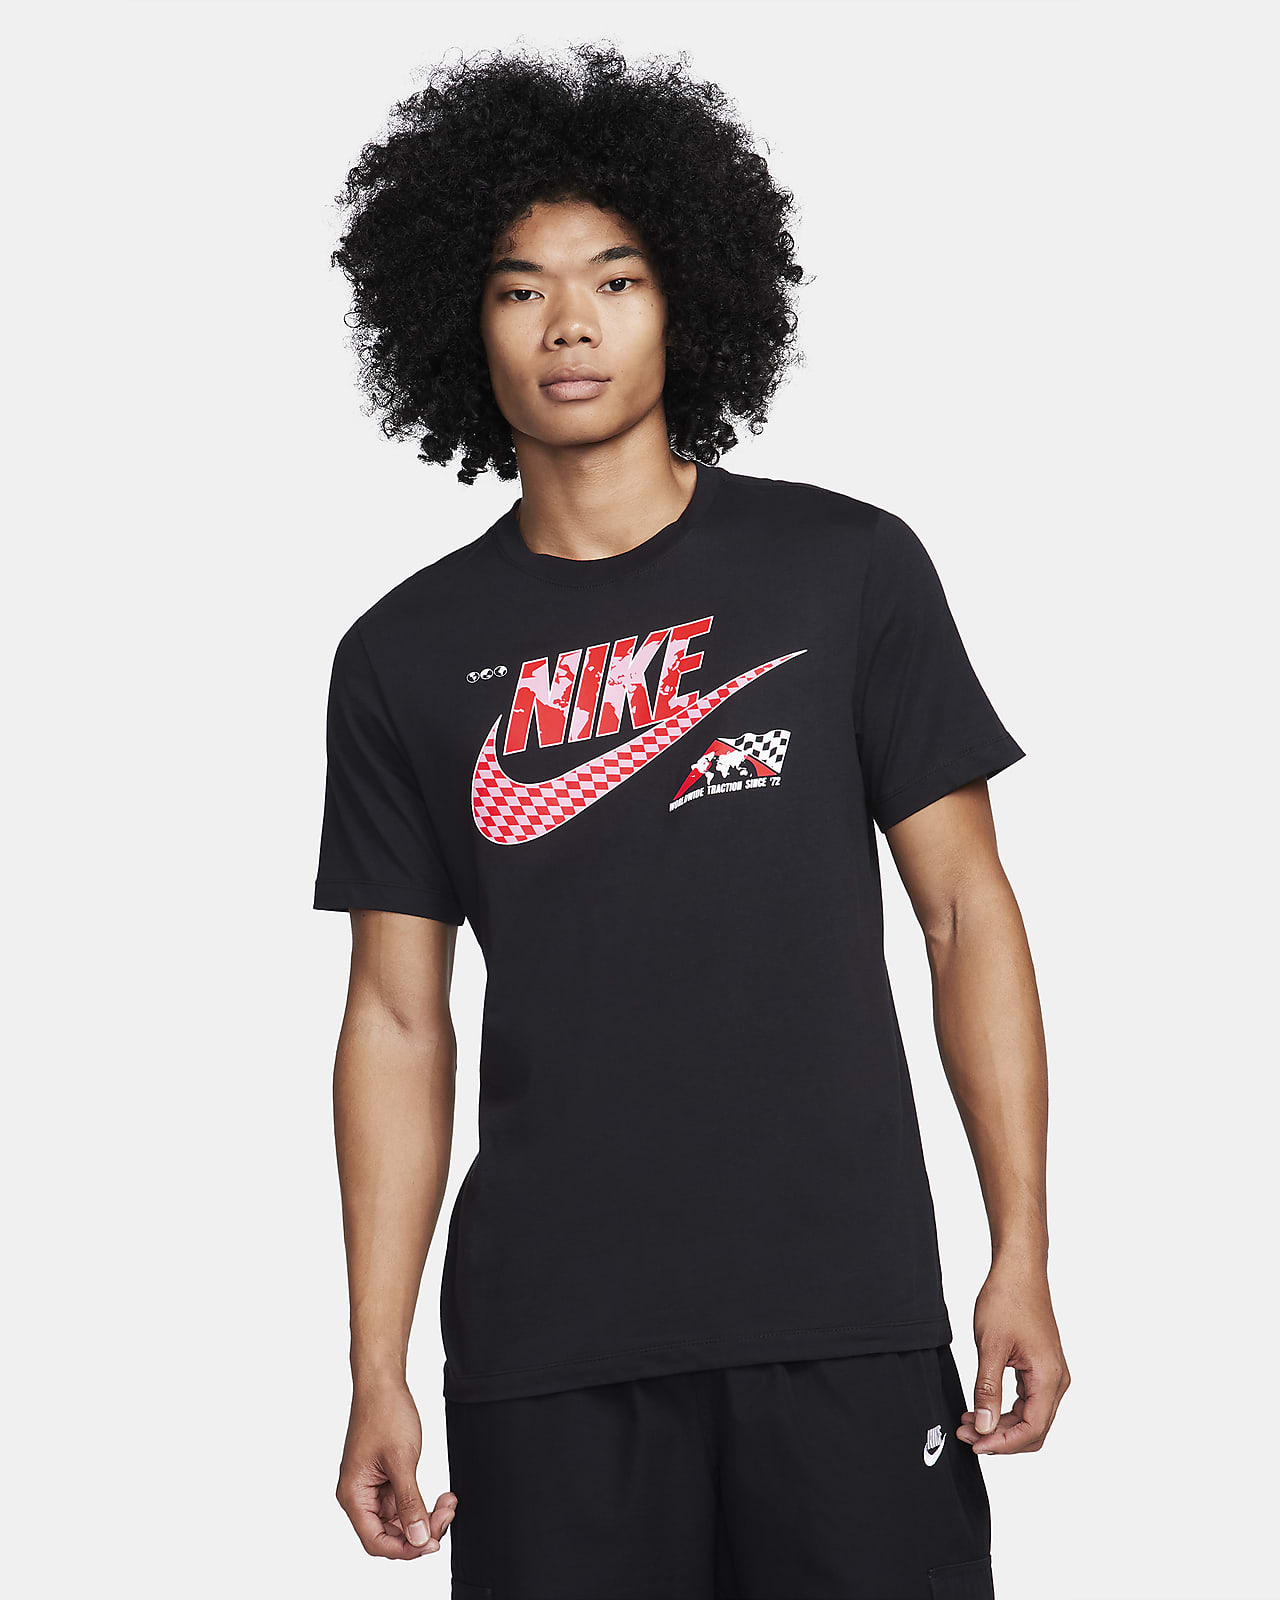 Nike T-Shirt in White & Black